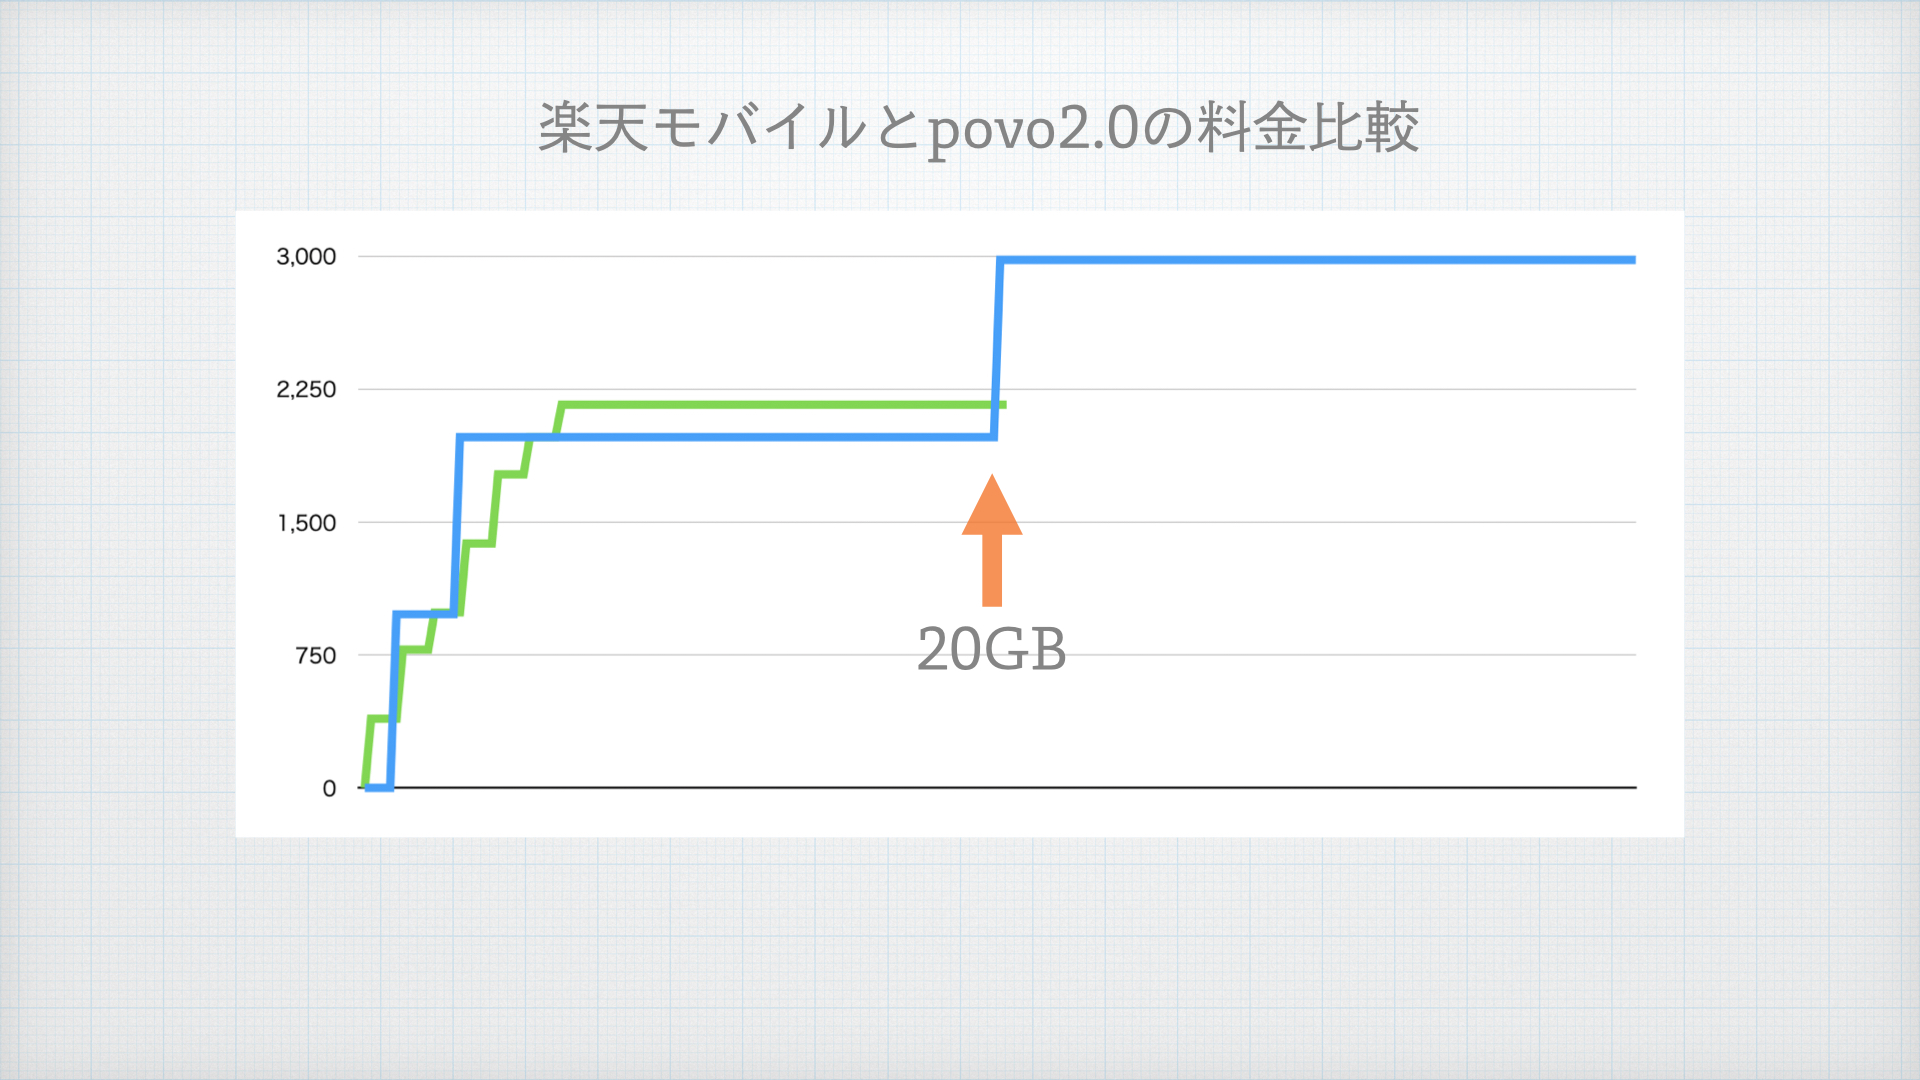 povo2.0と楽天モバイルの料金比較